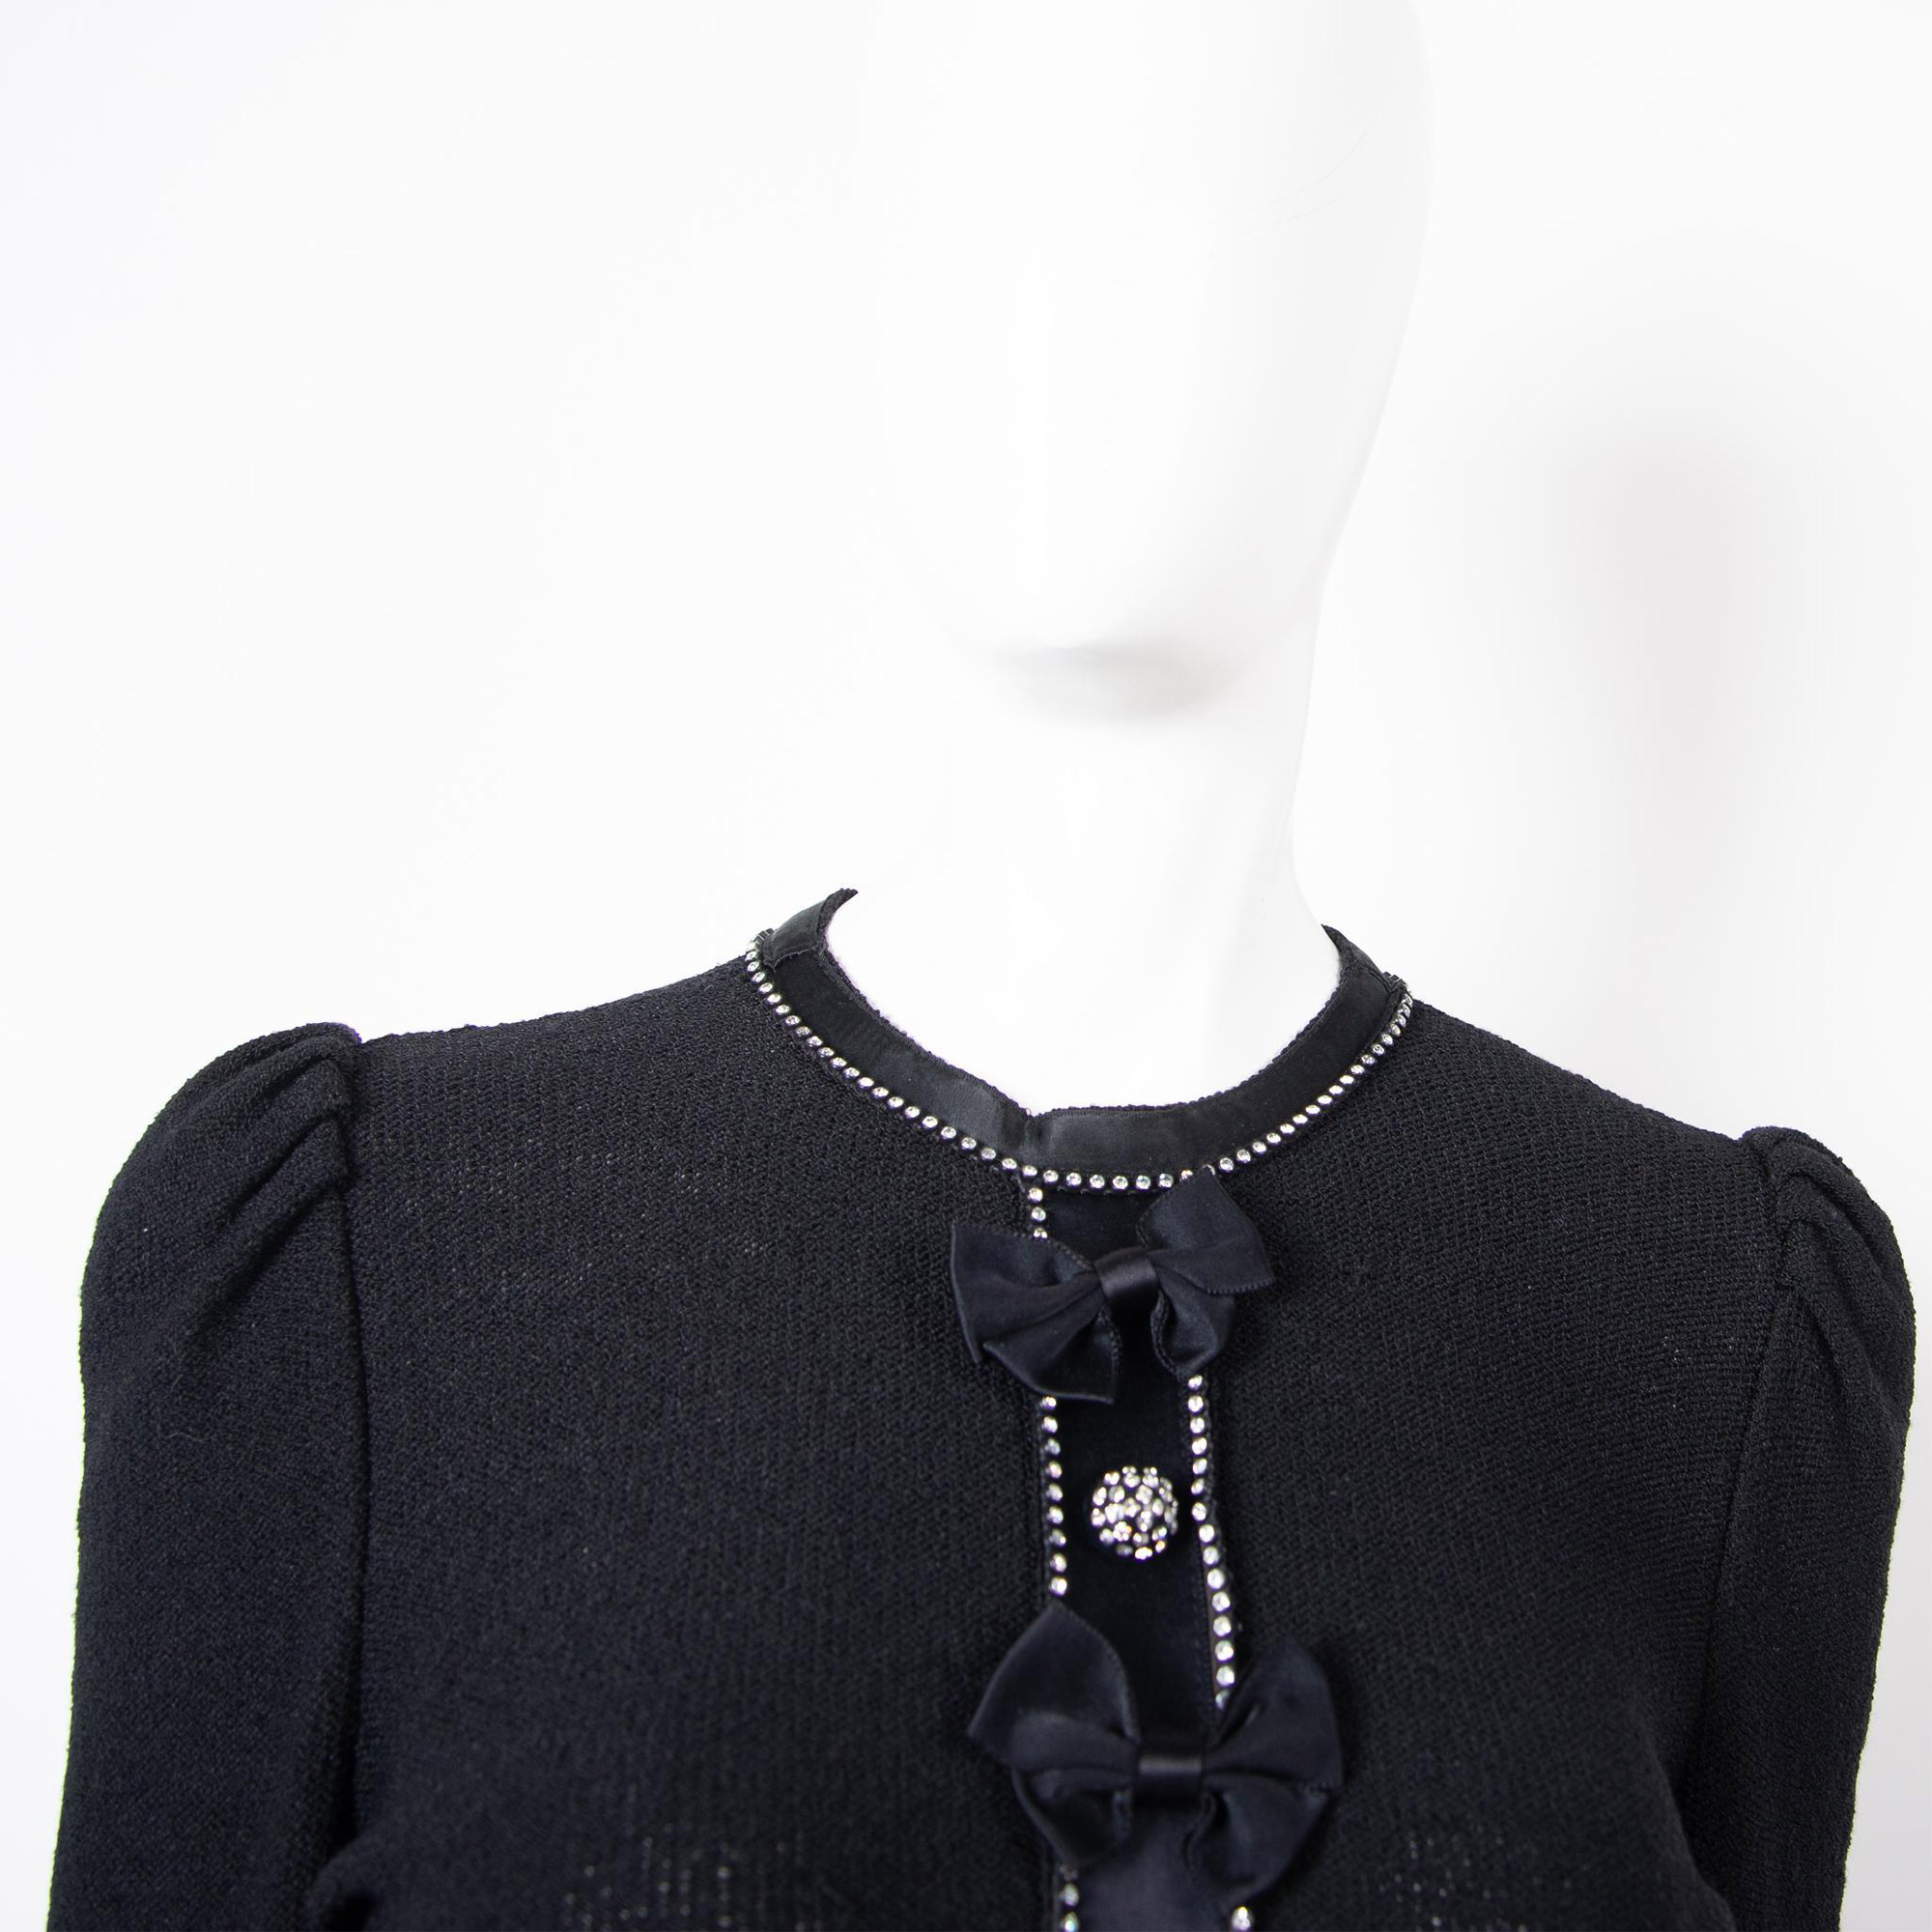 Adolfo for Neiman Marcus Rhinestone & Bow Knit Dress, Size Small - Image 4 of 8